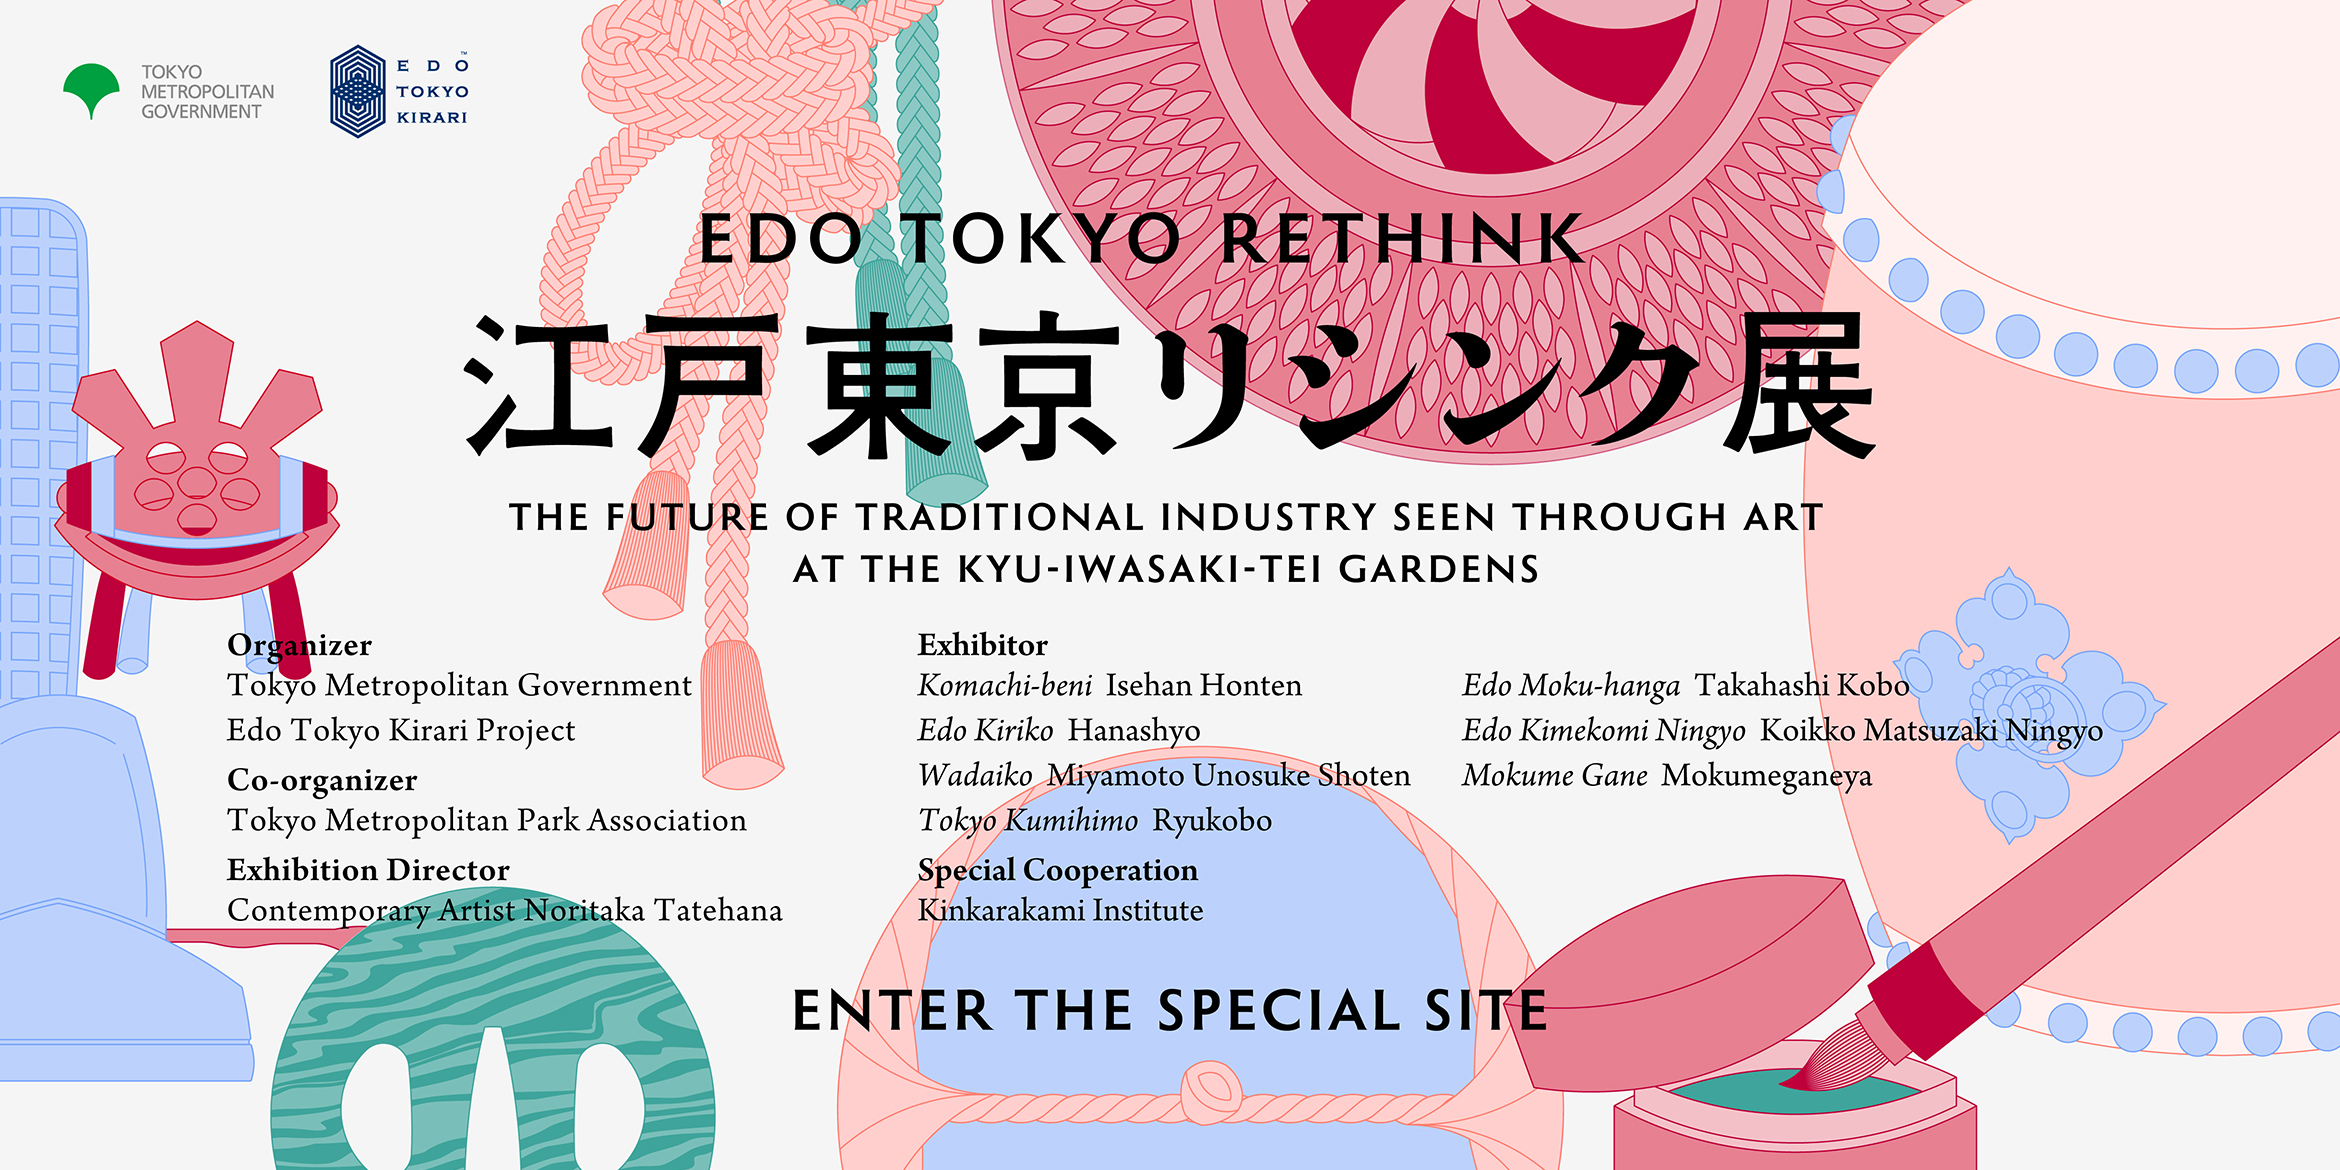 EDO TOKYO RETHINK THE FUTURE OF TRADITIONAL INDUSTRY SEEN THROUGH ART AT THE KYU-IWASAKI-TEI GARDENS